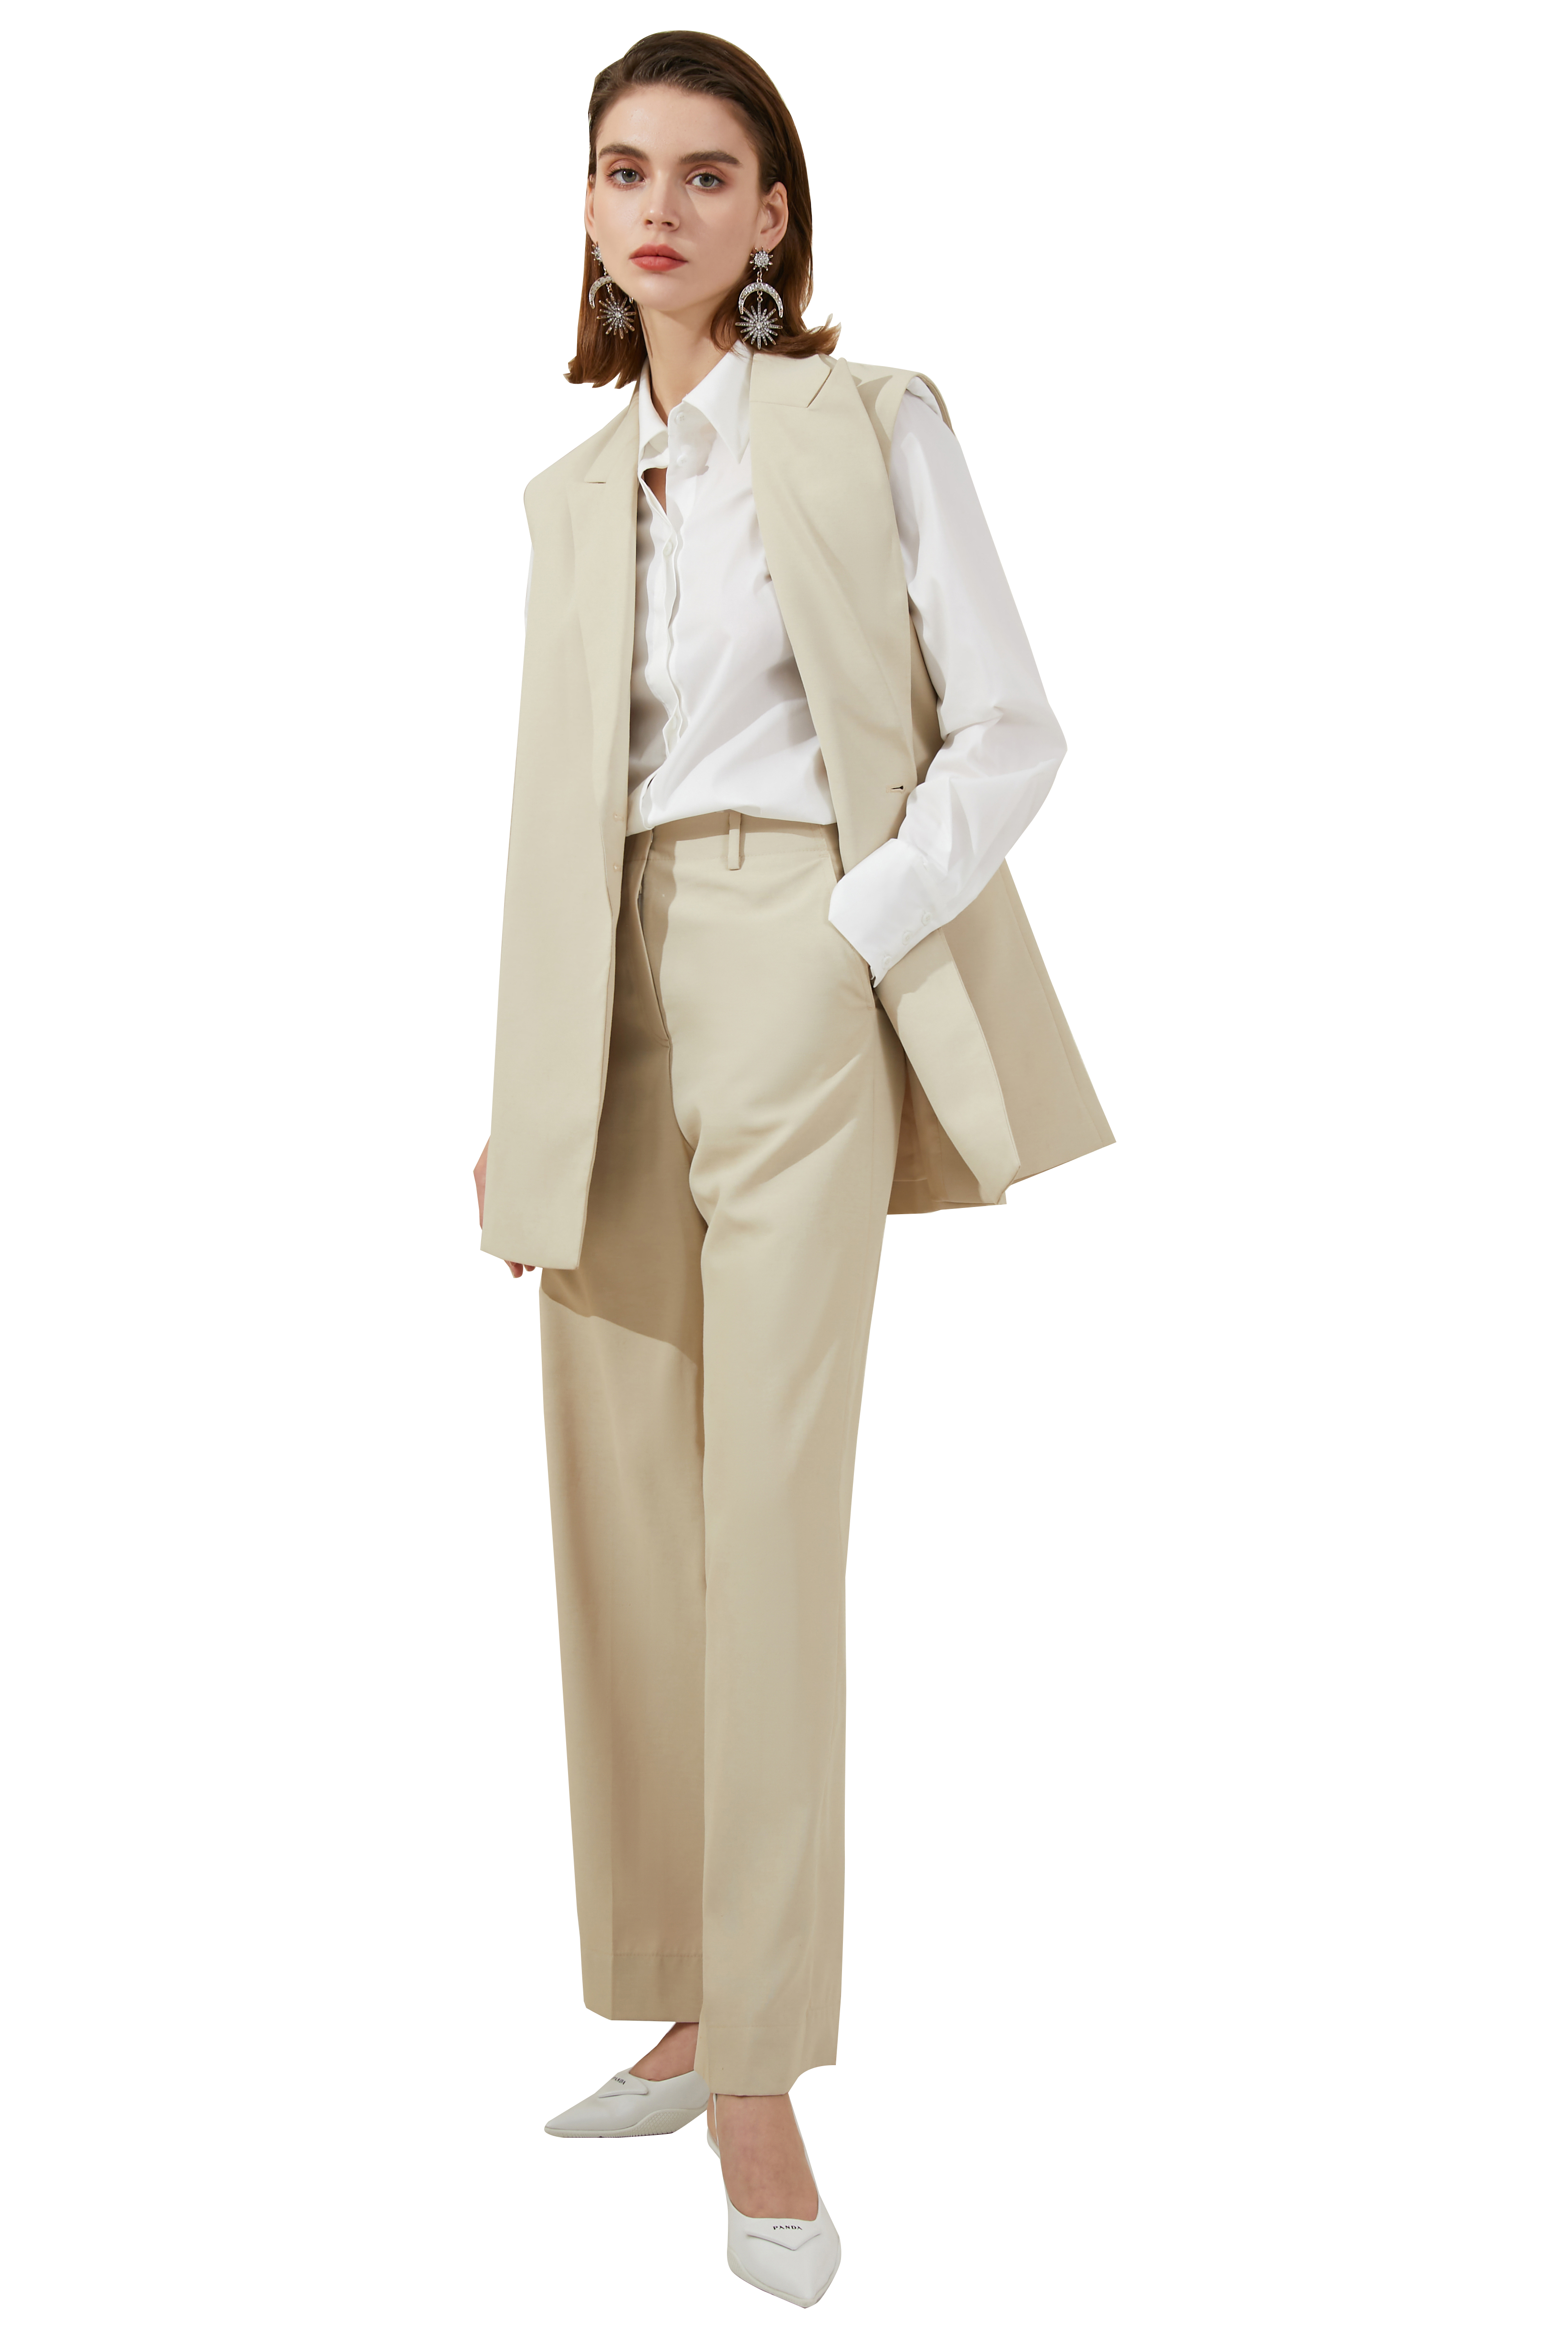 Beige Loose Fit Vest and Pants Two Piece Set - FashionByTeresa